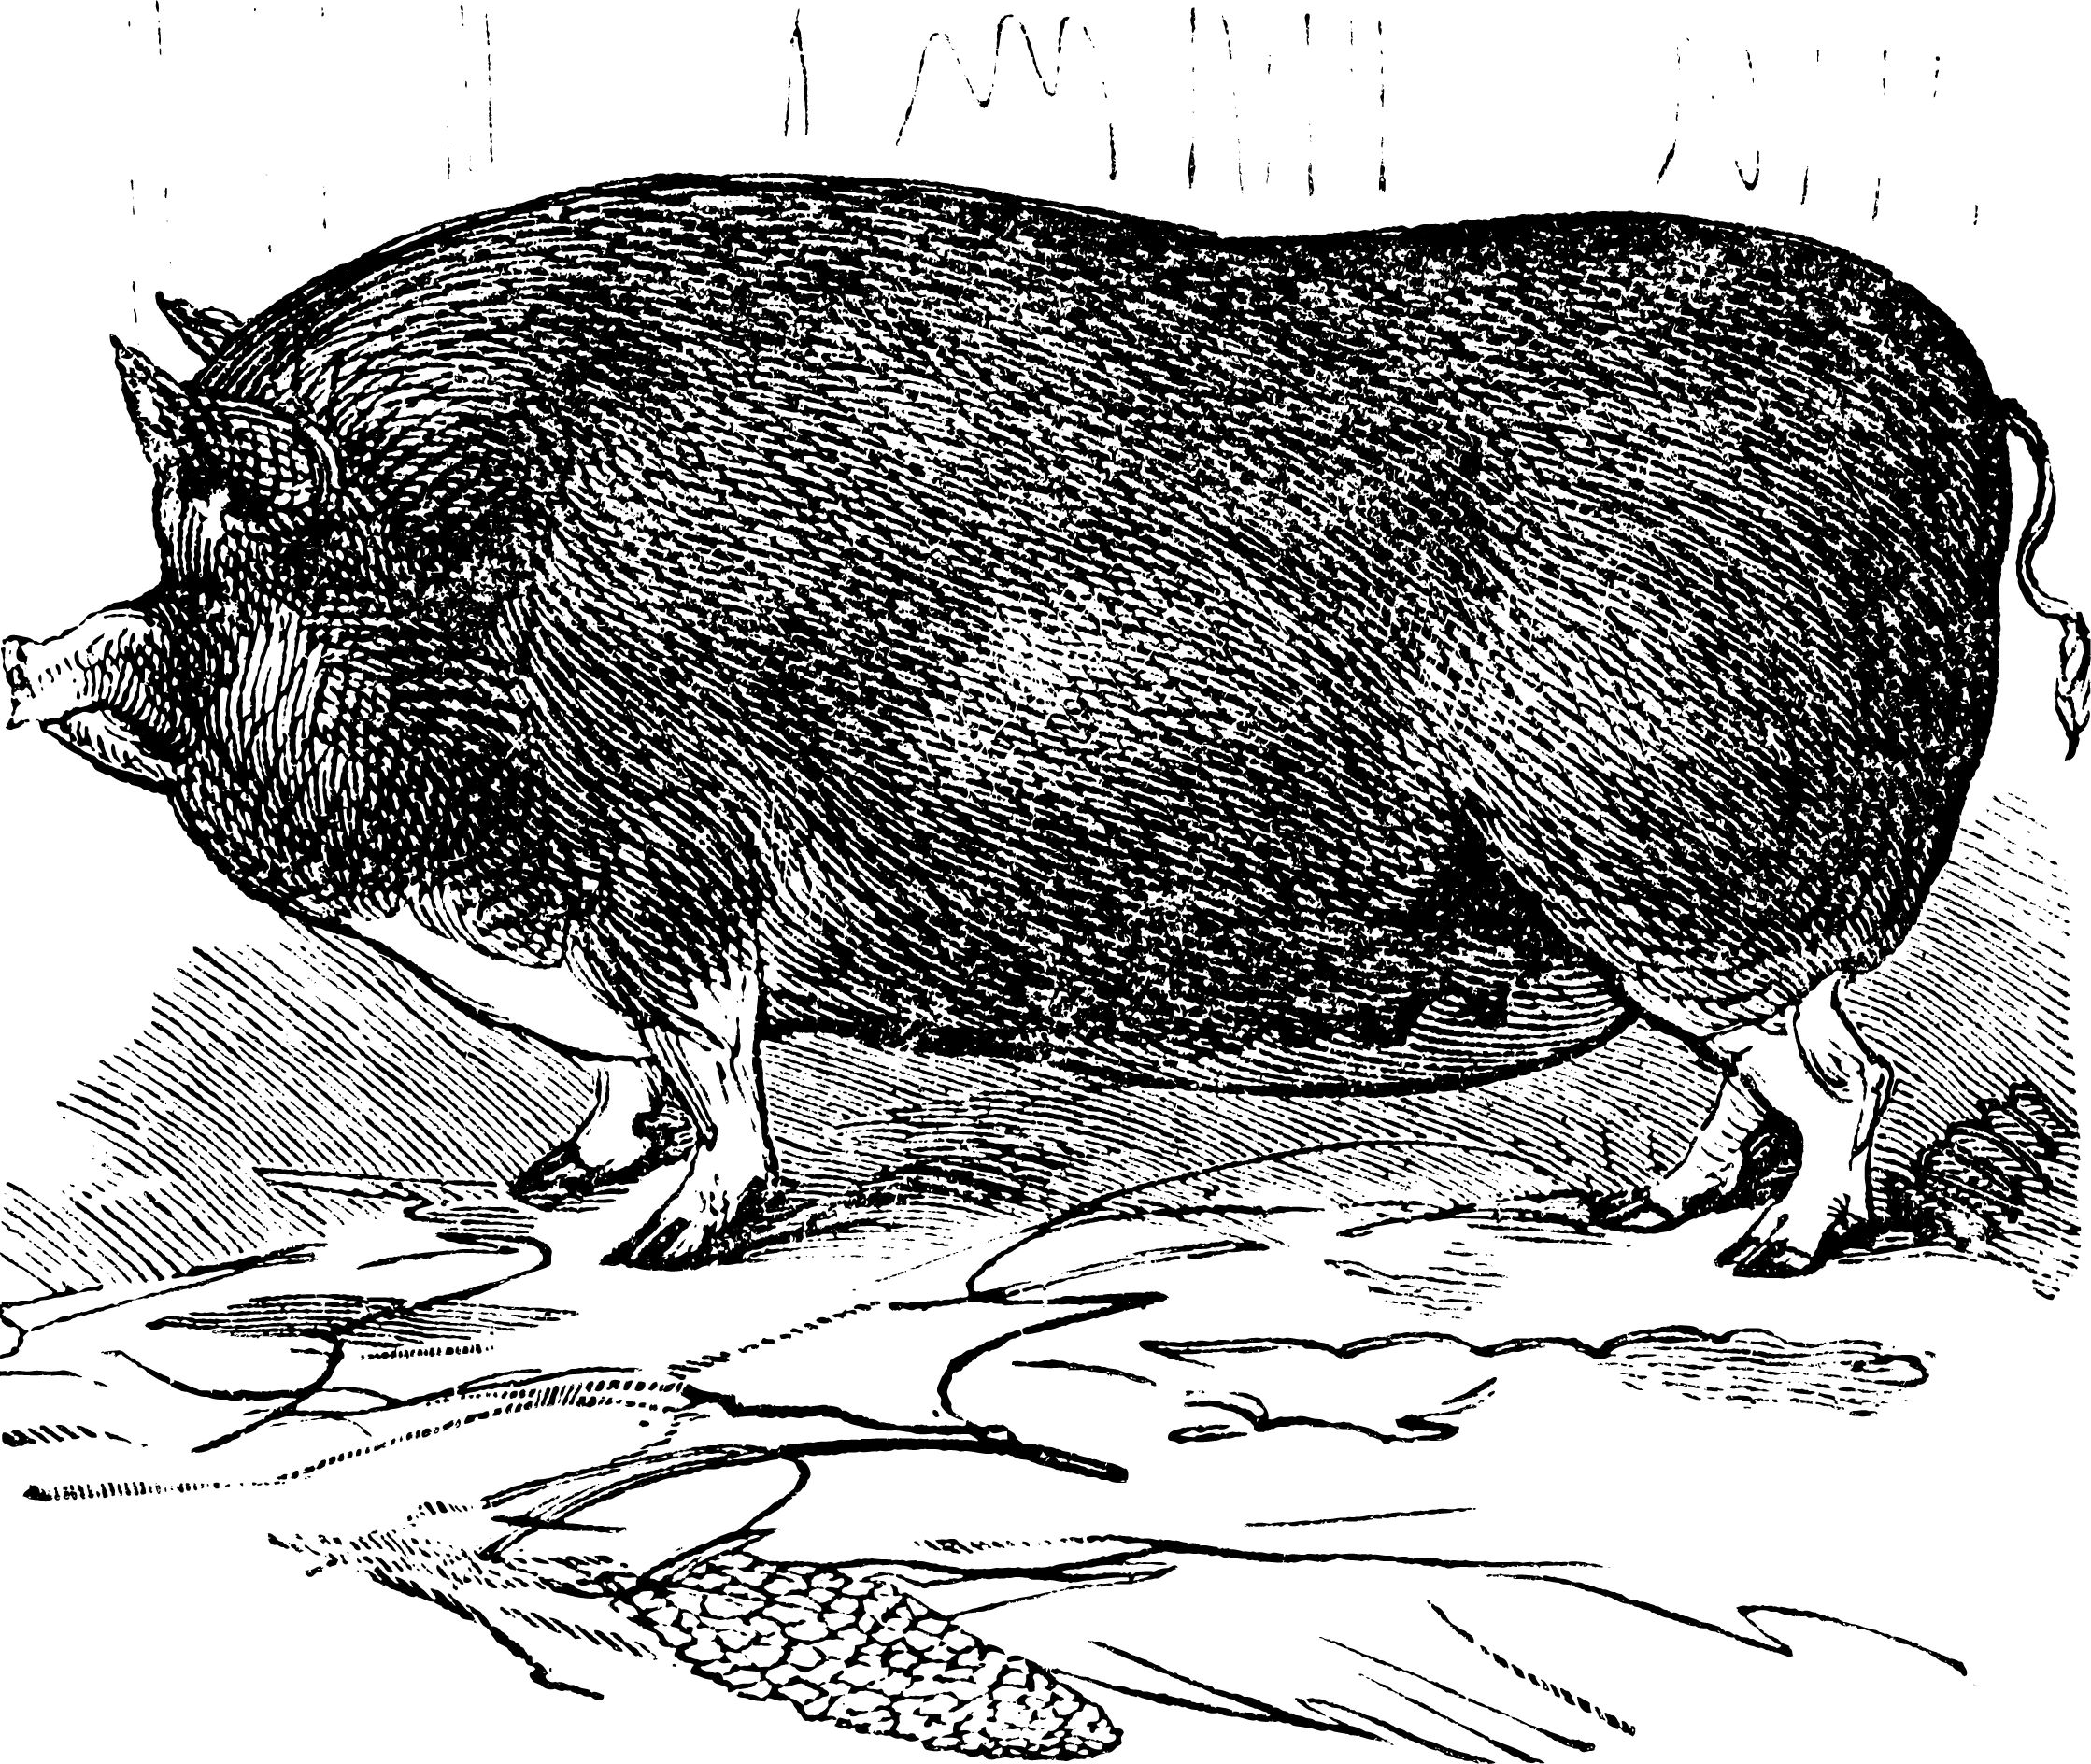 berkshire boar napoleon